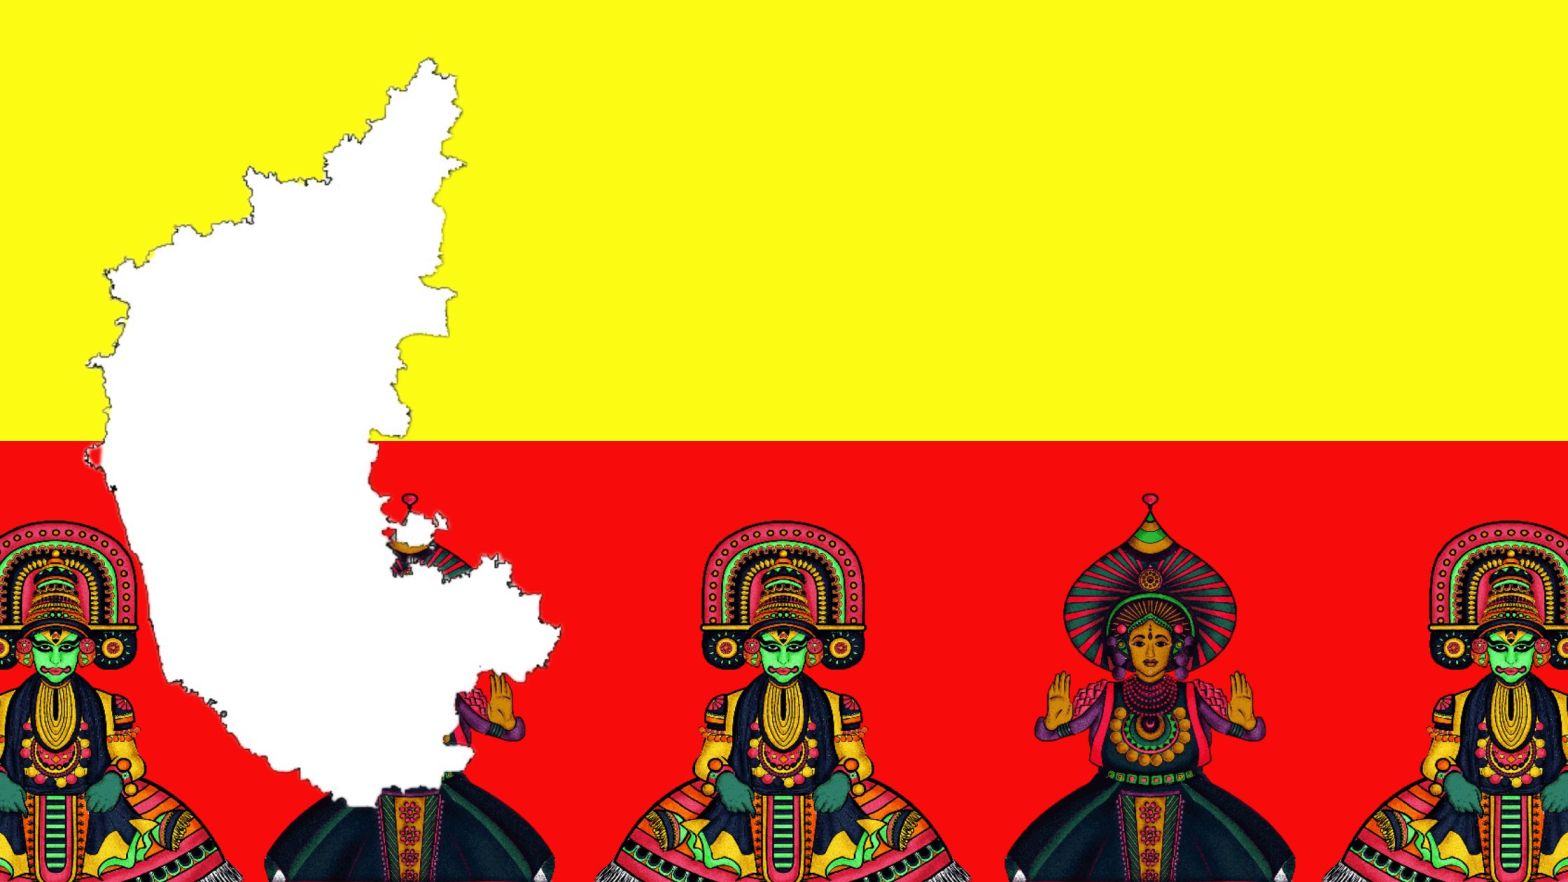 Karnataka Day